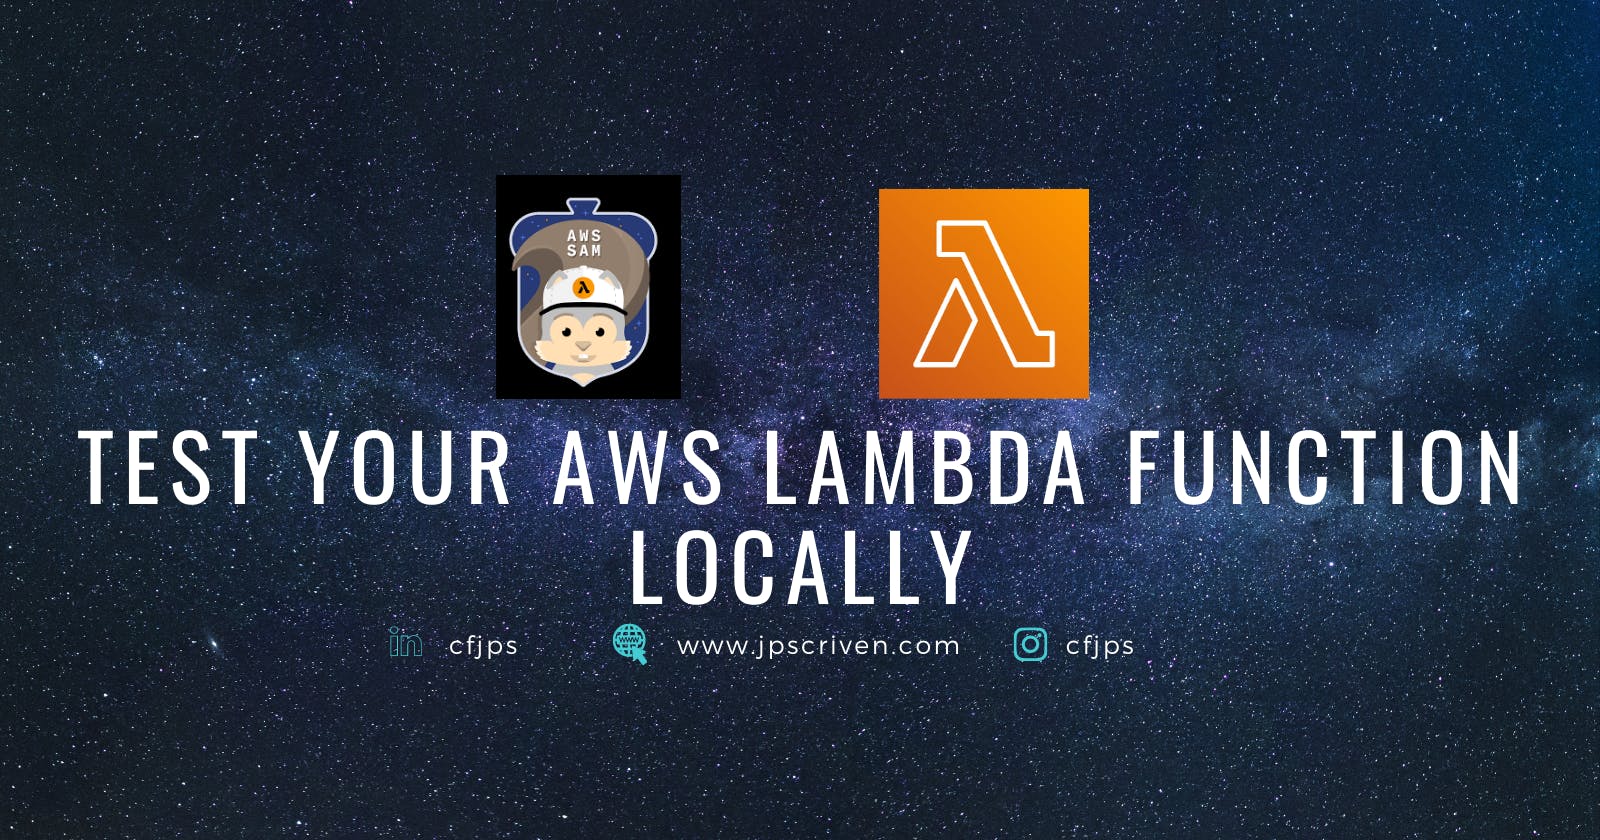 Test your AWS Lambda function locally